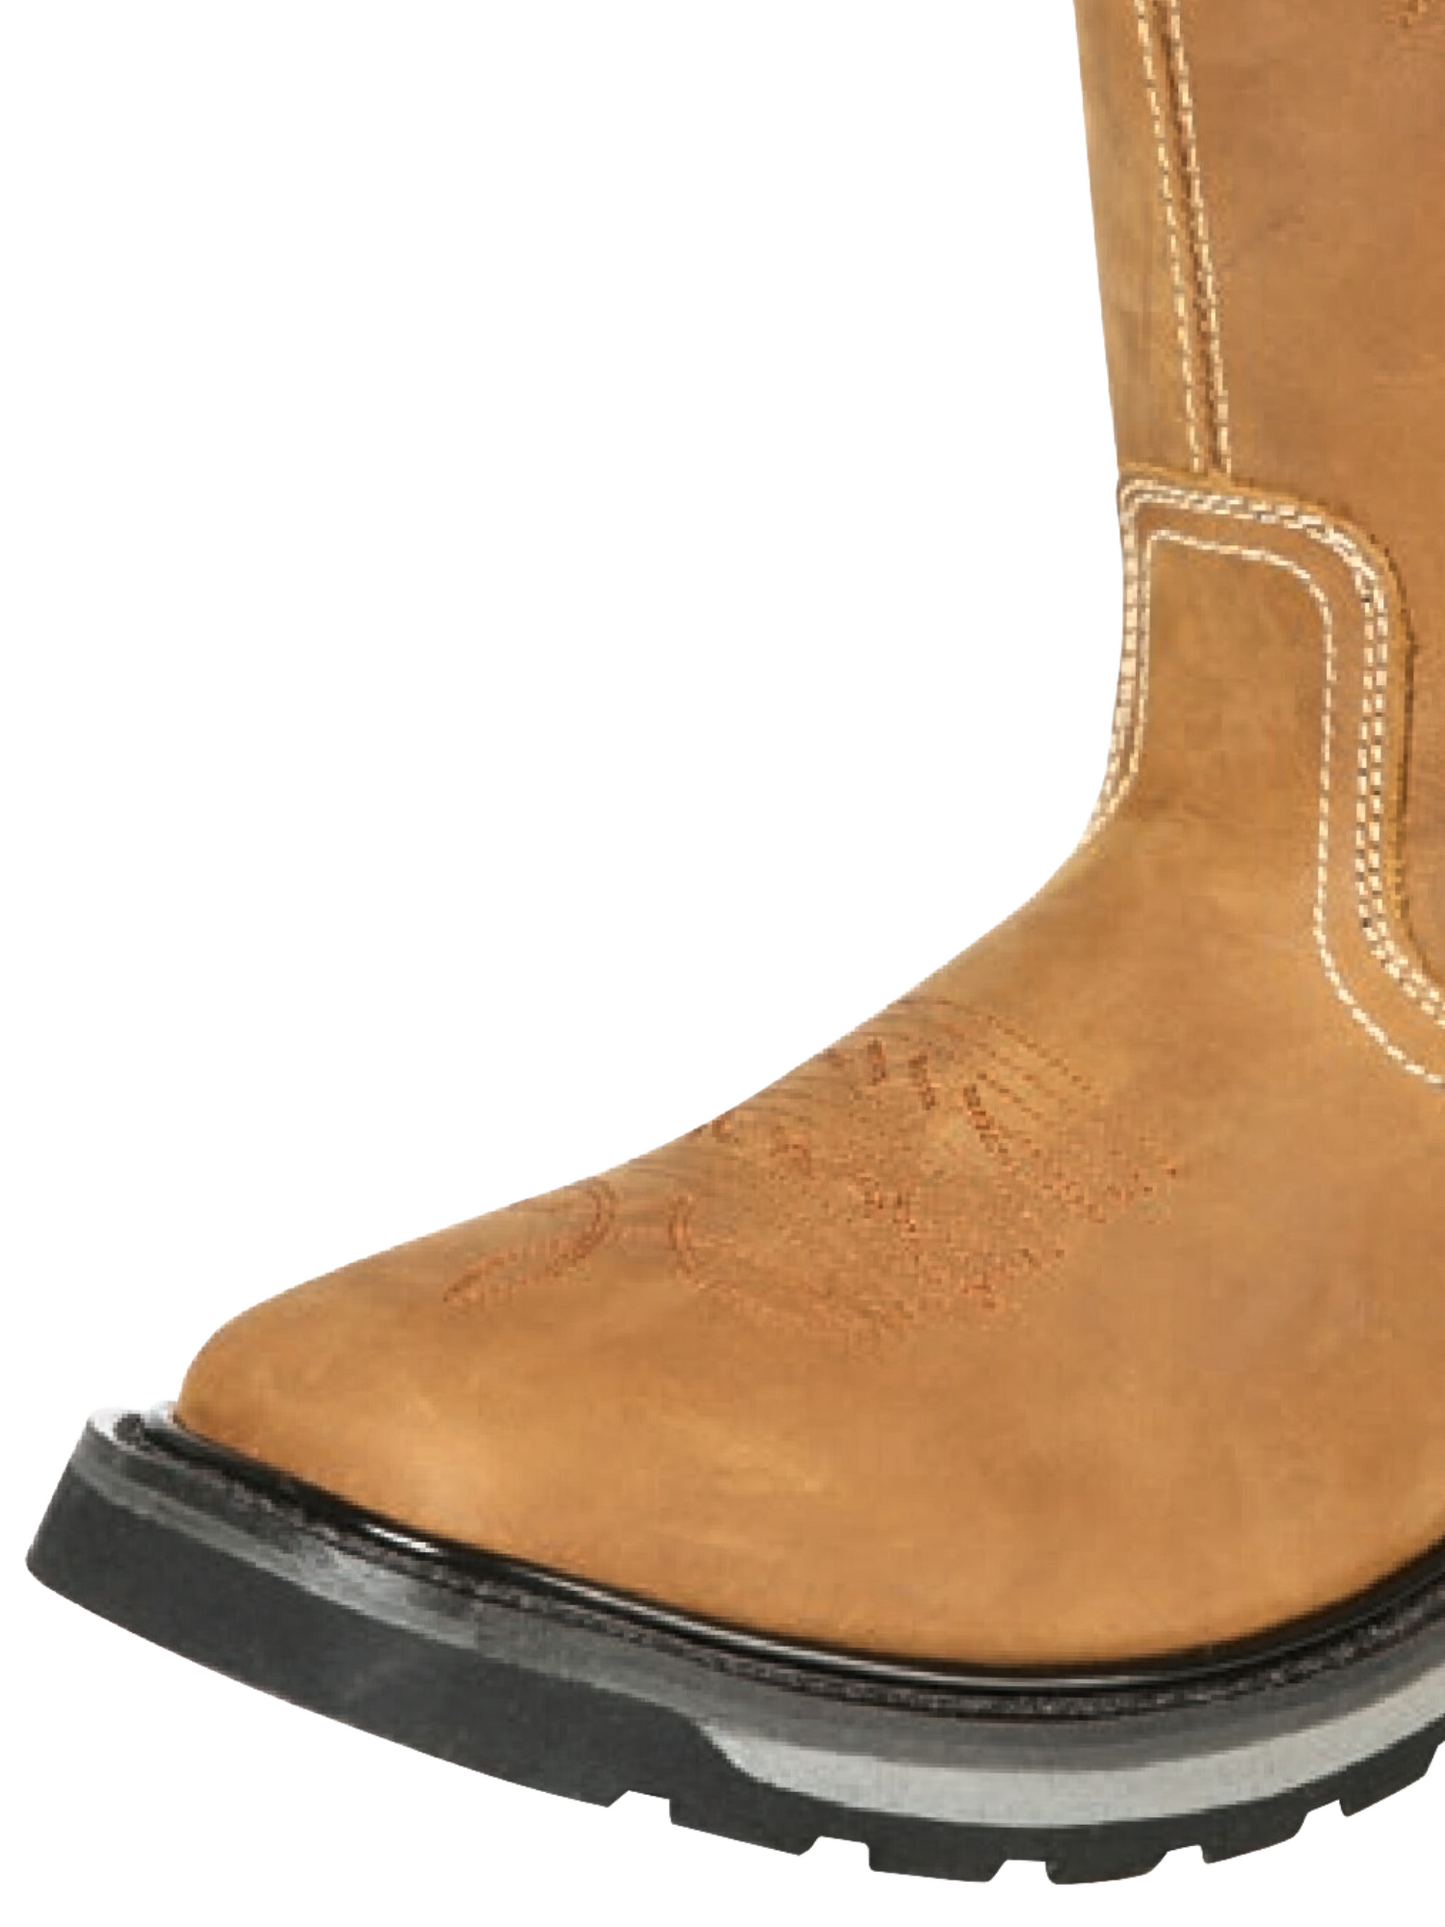 Men's Genuine Leather Soft Toe Pull-On Tube Rodeo Work Boots 'El General' - ID: 51274 Work Boots El General